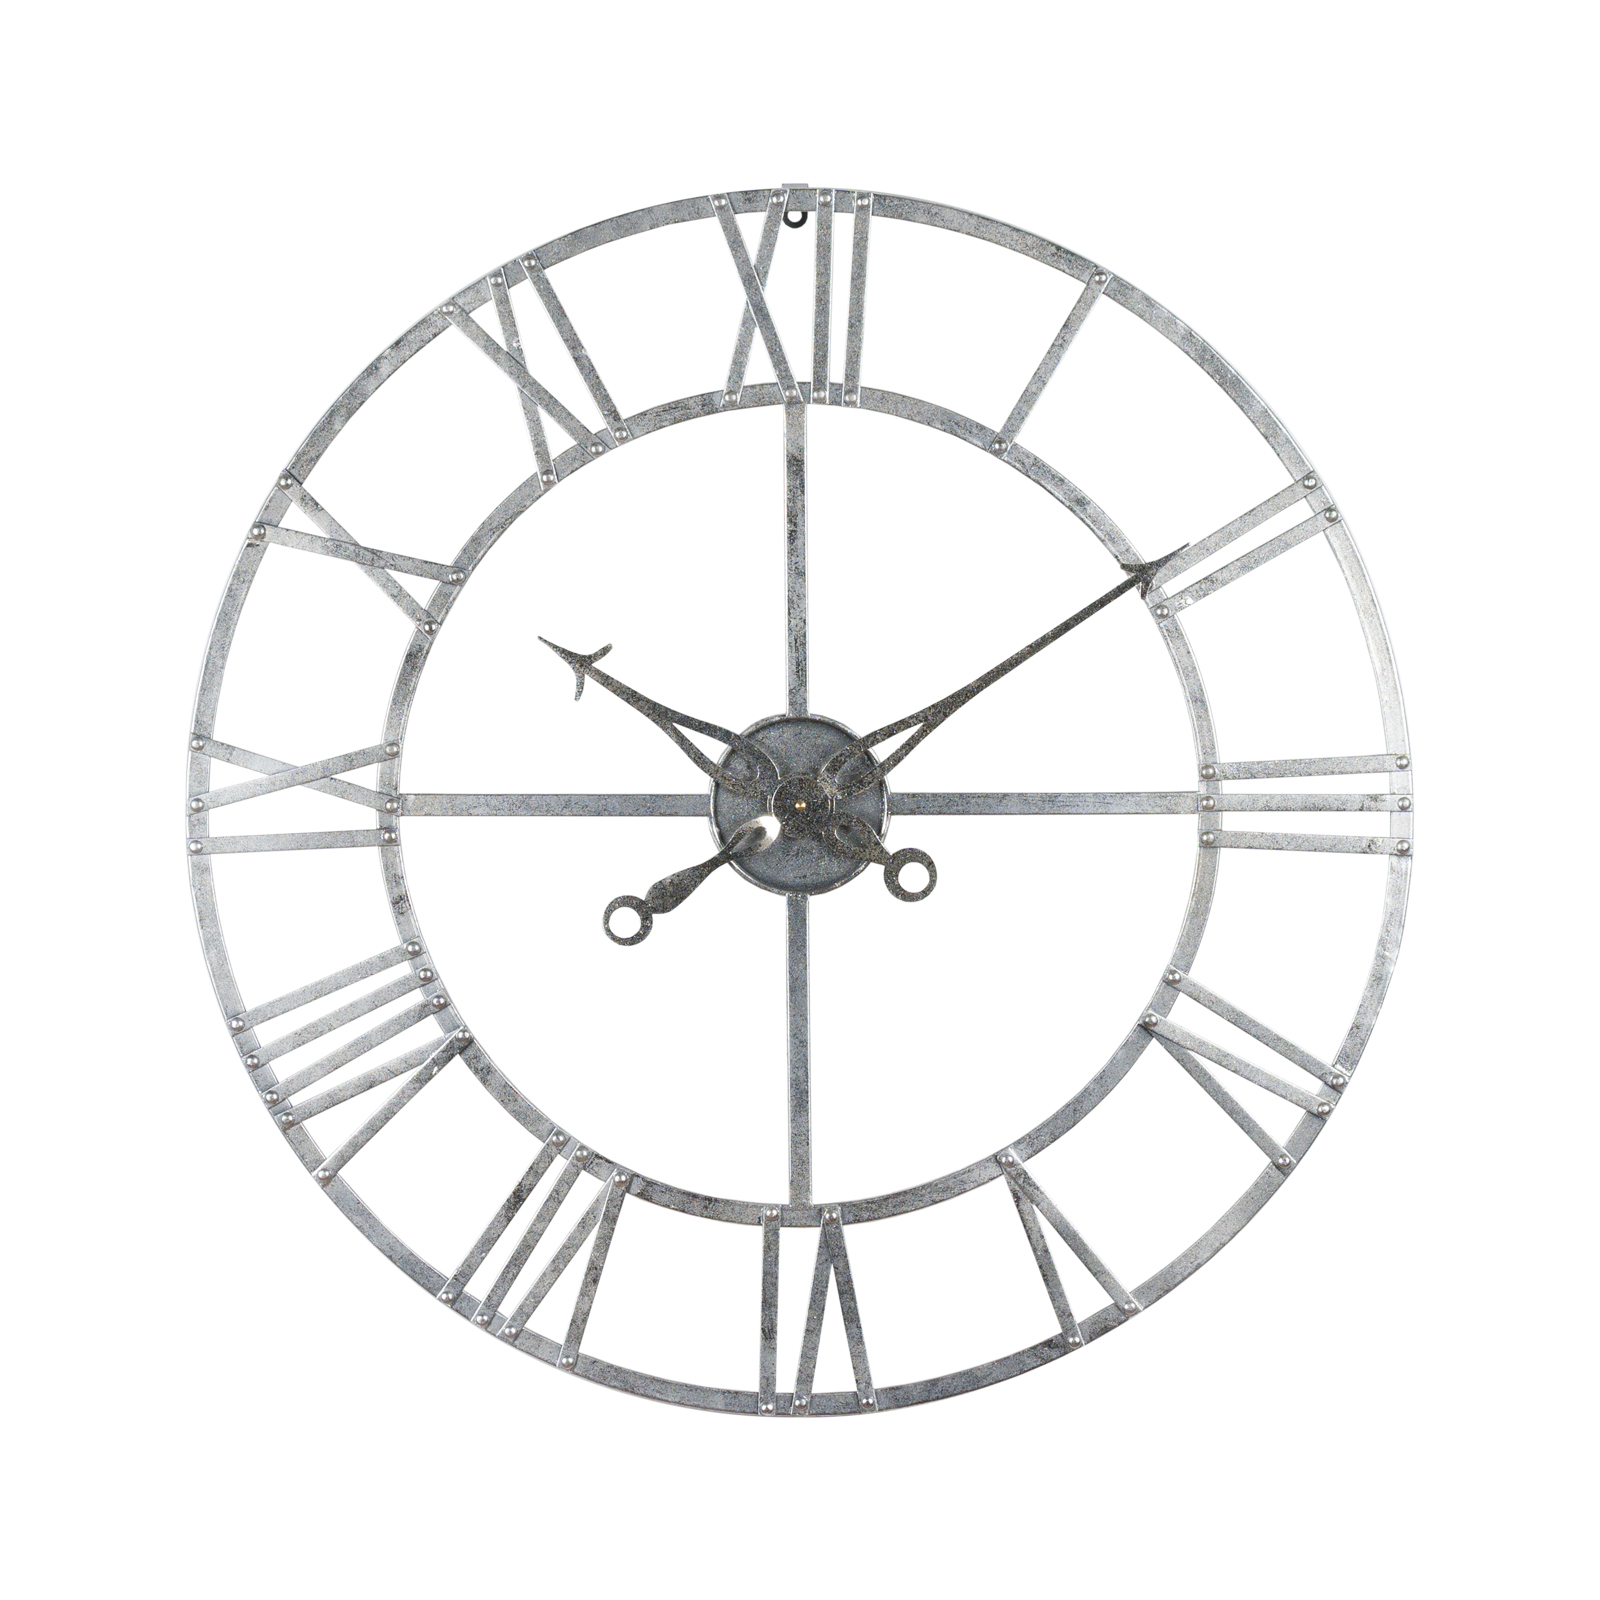 Silver Foil Skeleton Wall Clock - Image 1